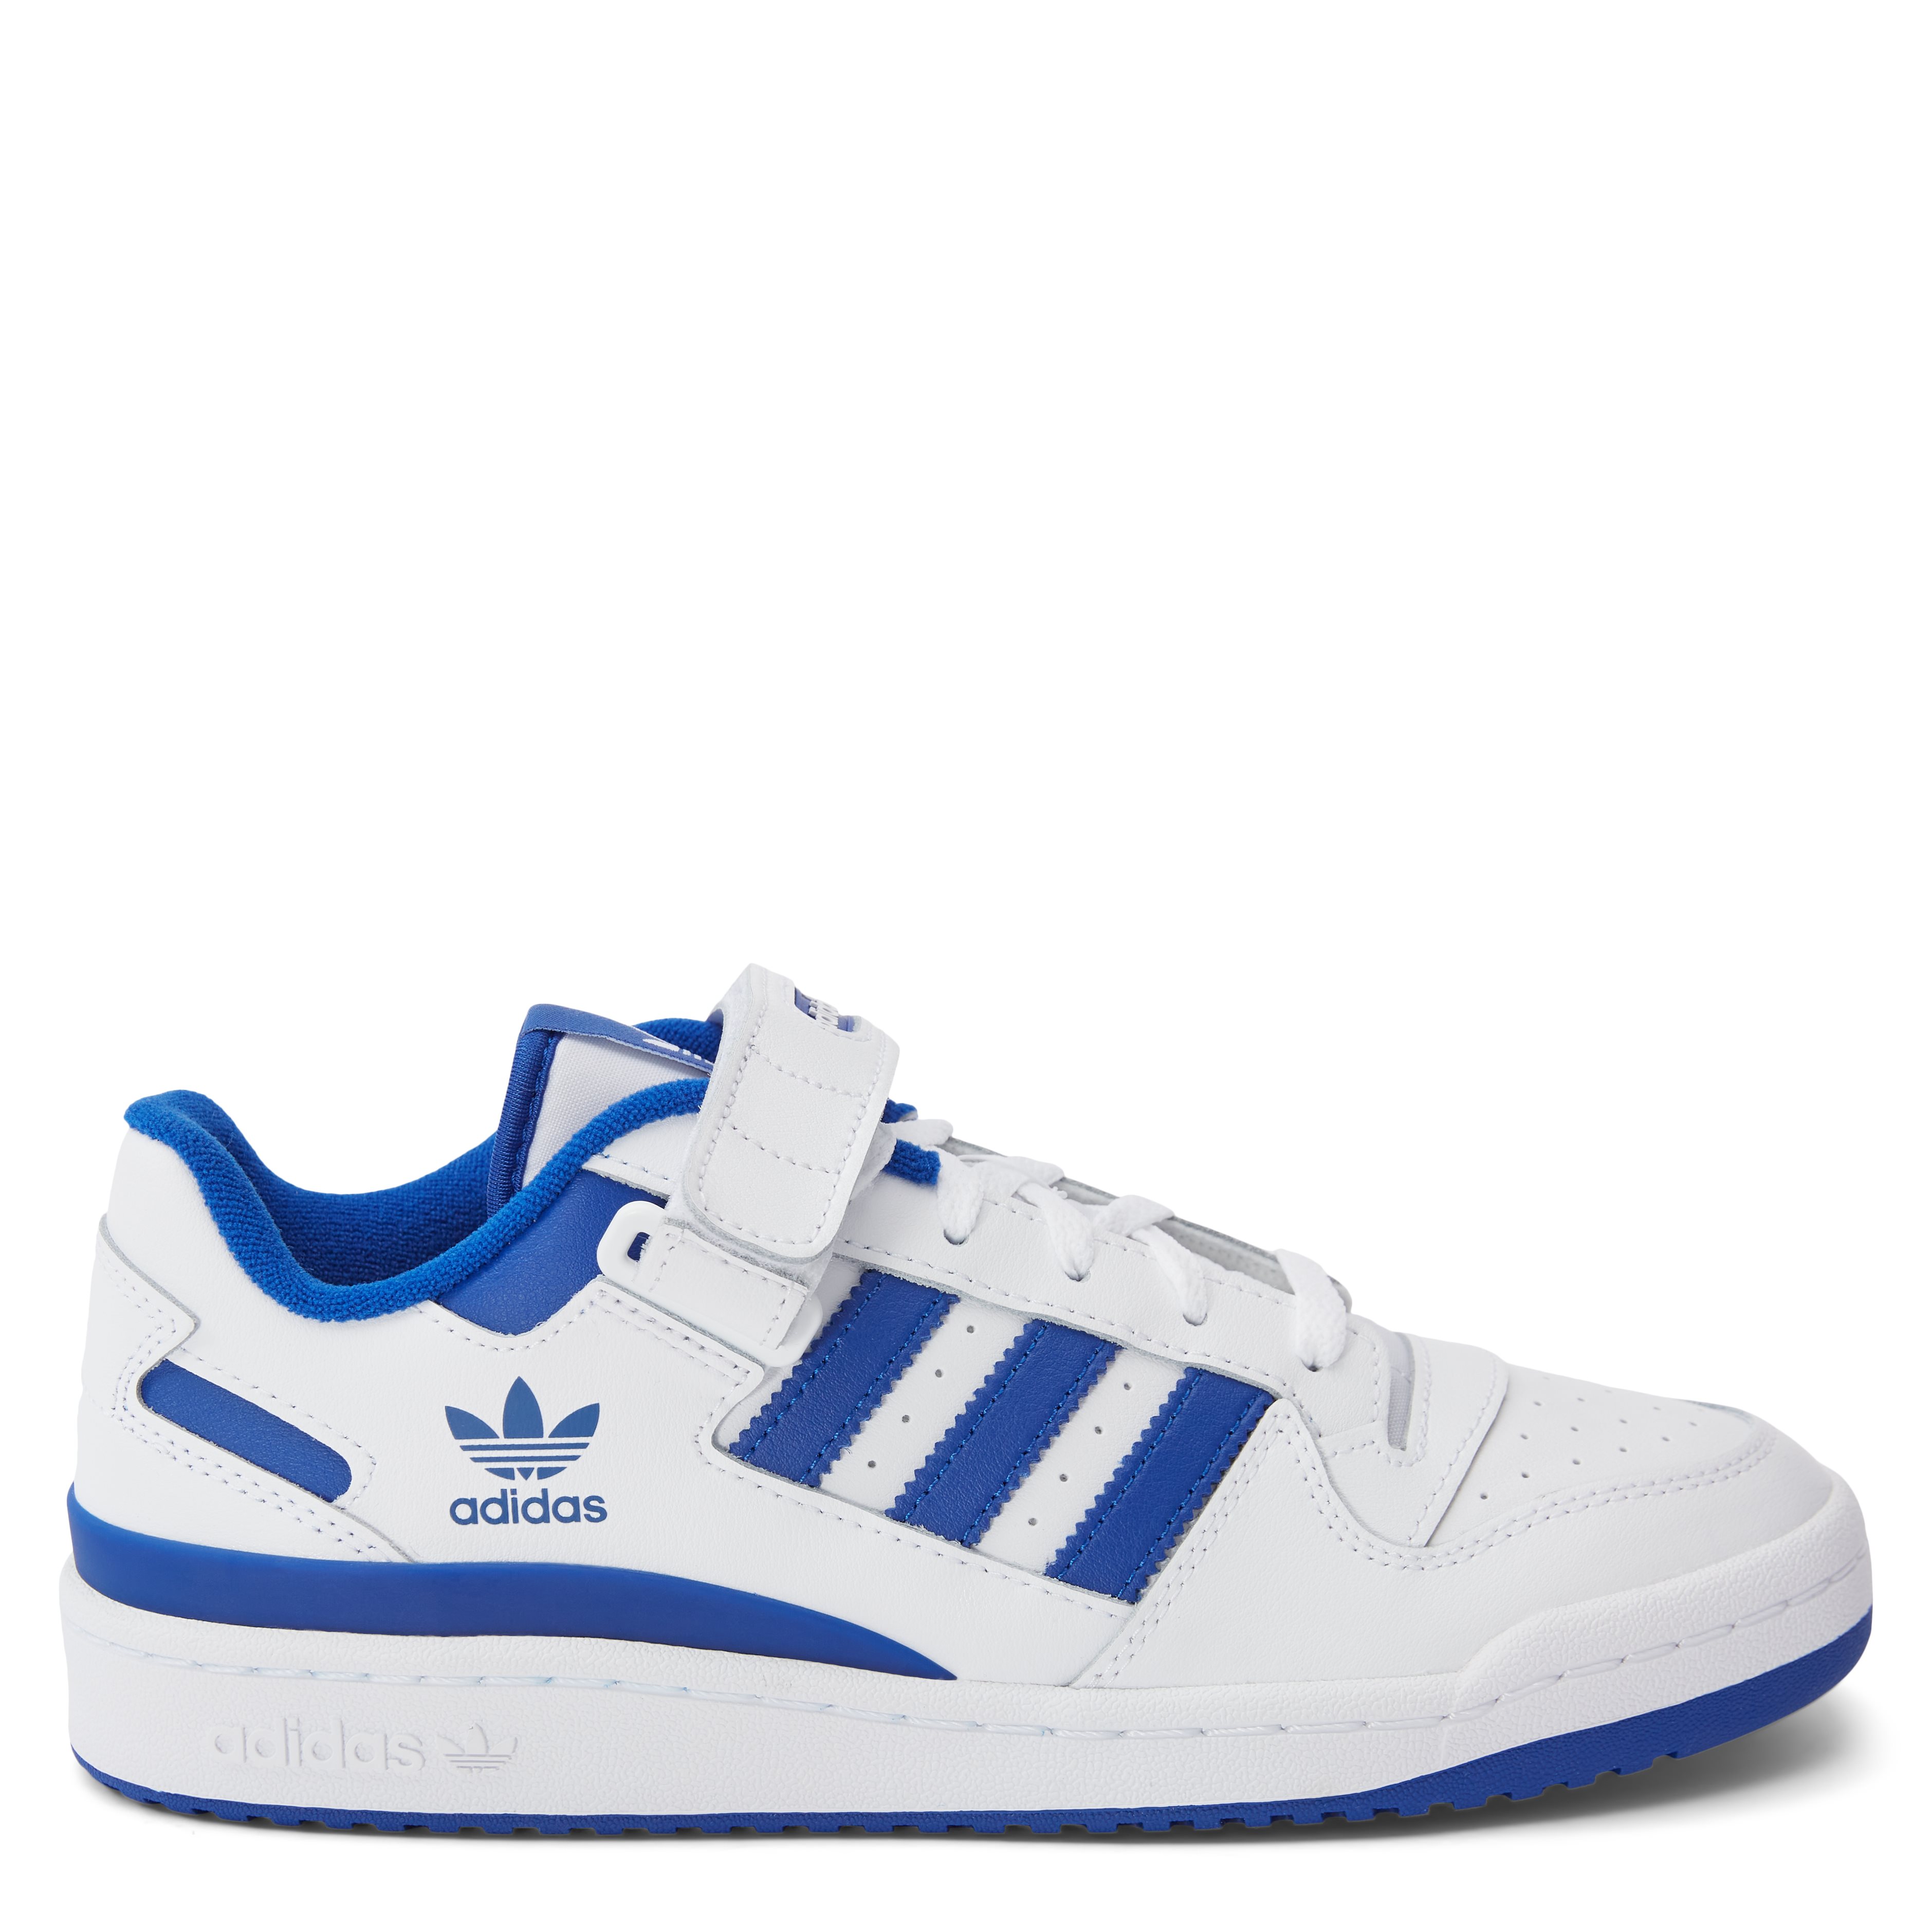 Adidas Originals Shoes FORUM LOW FY7756. Blue